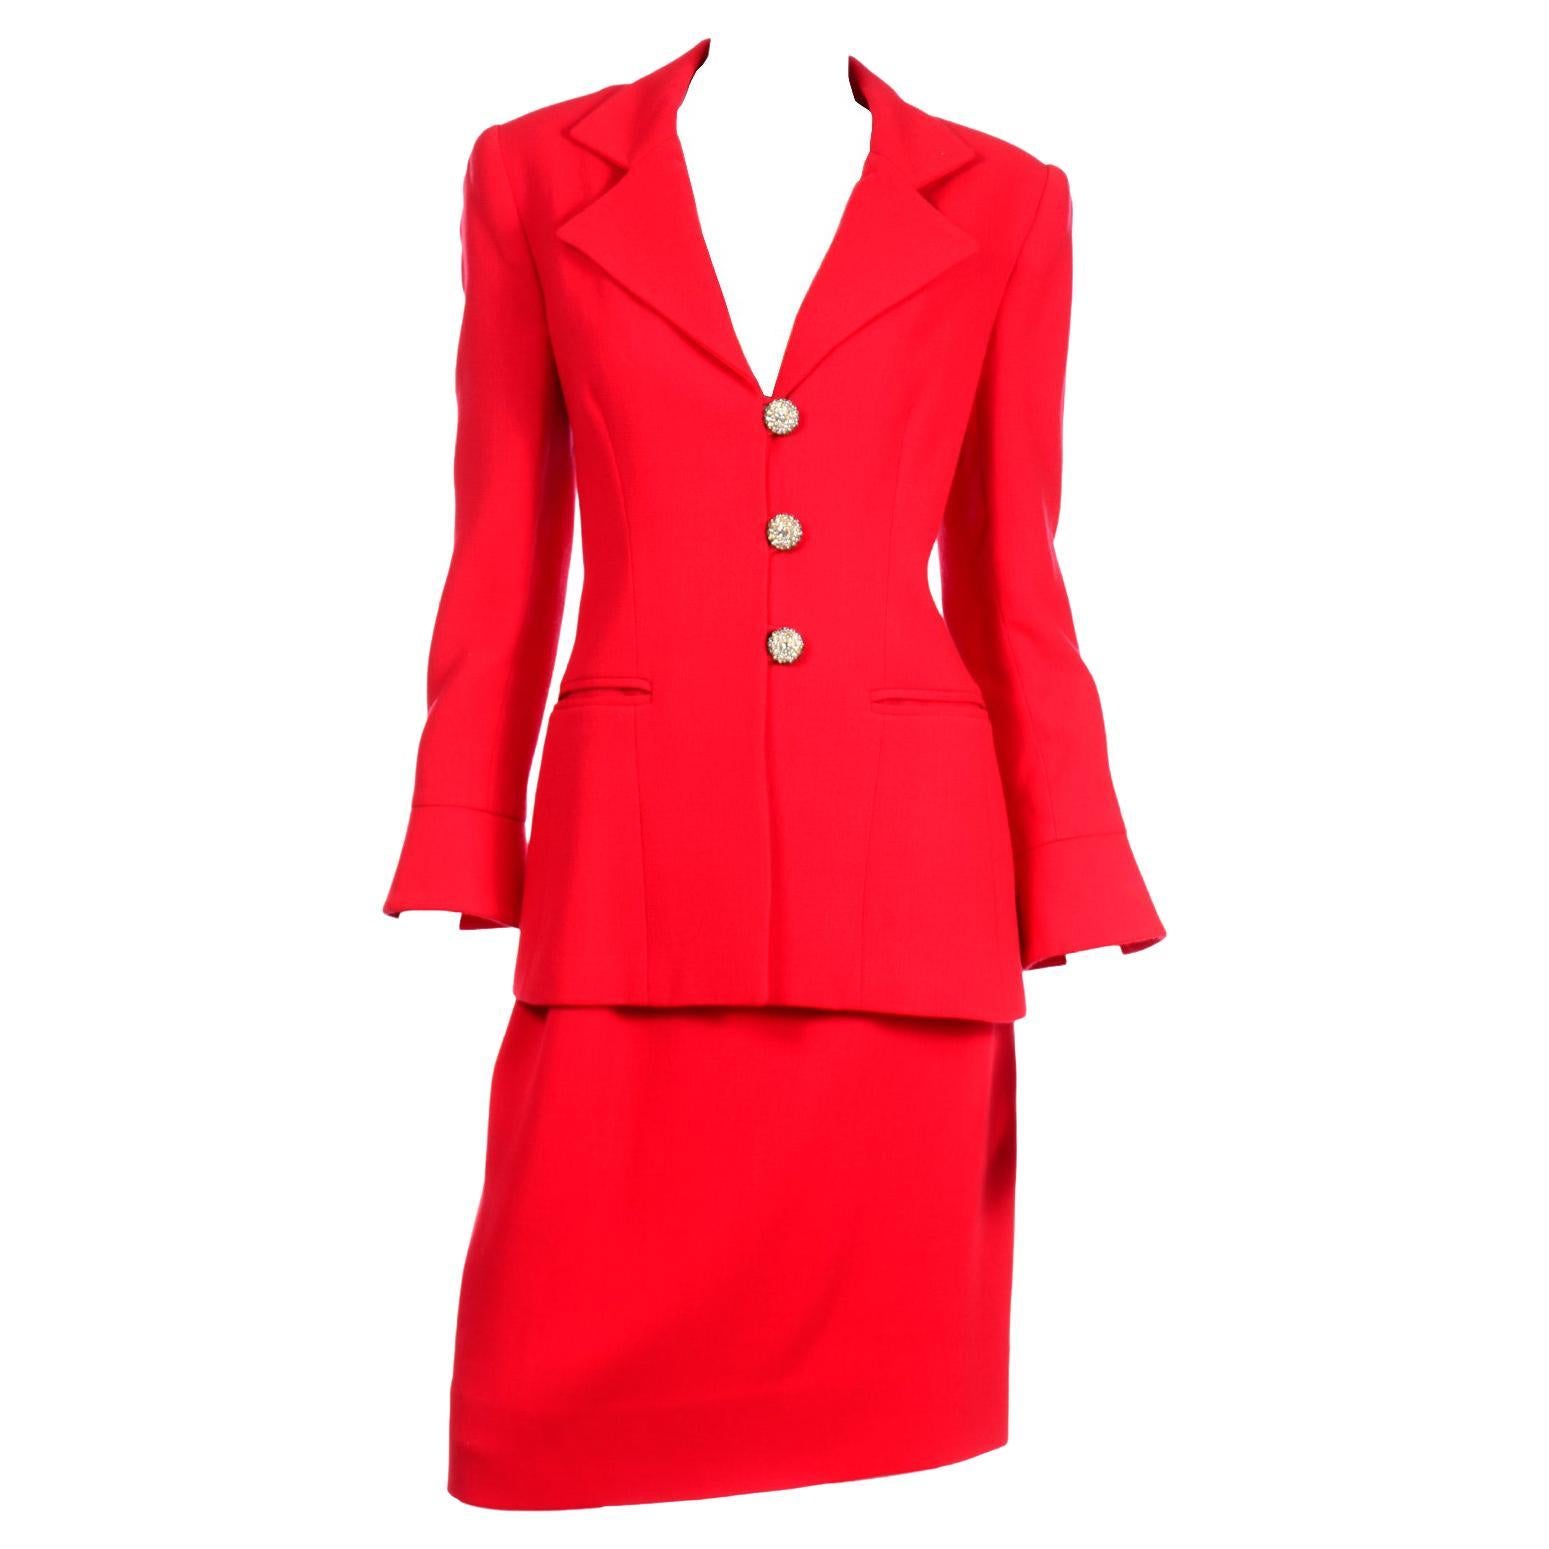 David Hayes Tomato Red Jacket & Skirt Suit with Rhinestone Buttons & Flared Sleeves (Ensemble veste et jupe rouge tomate avec boutons en strass et manches évasées)